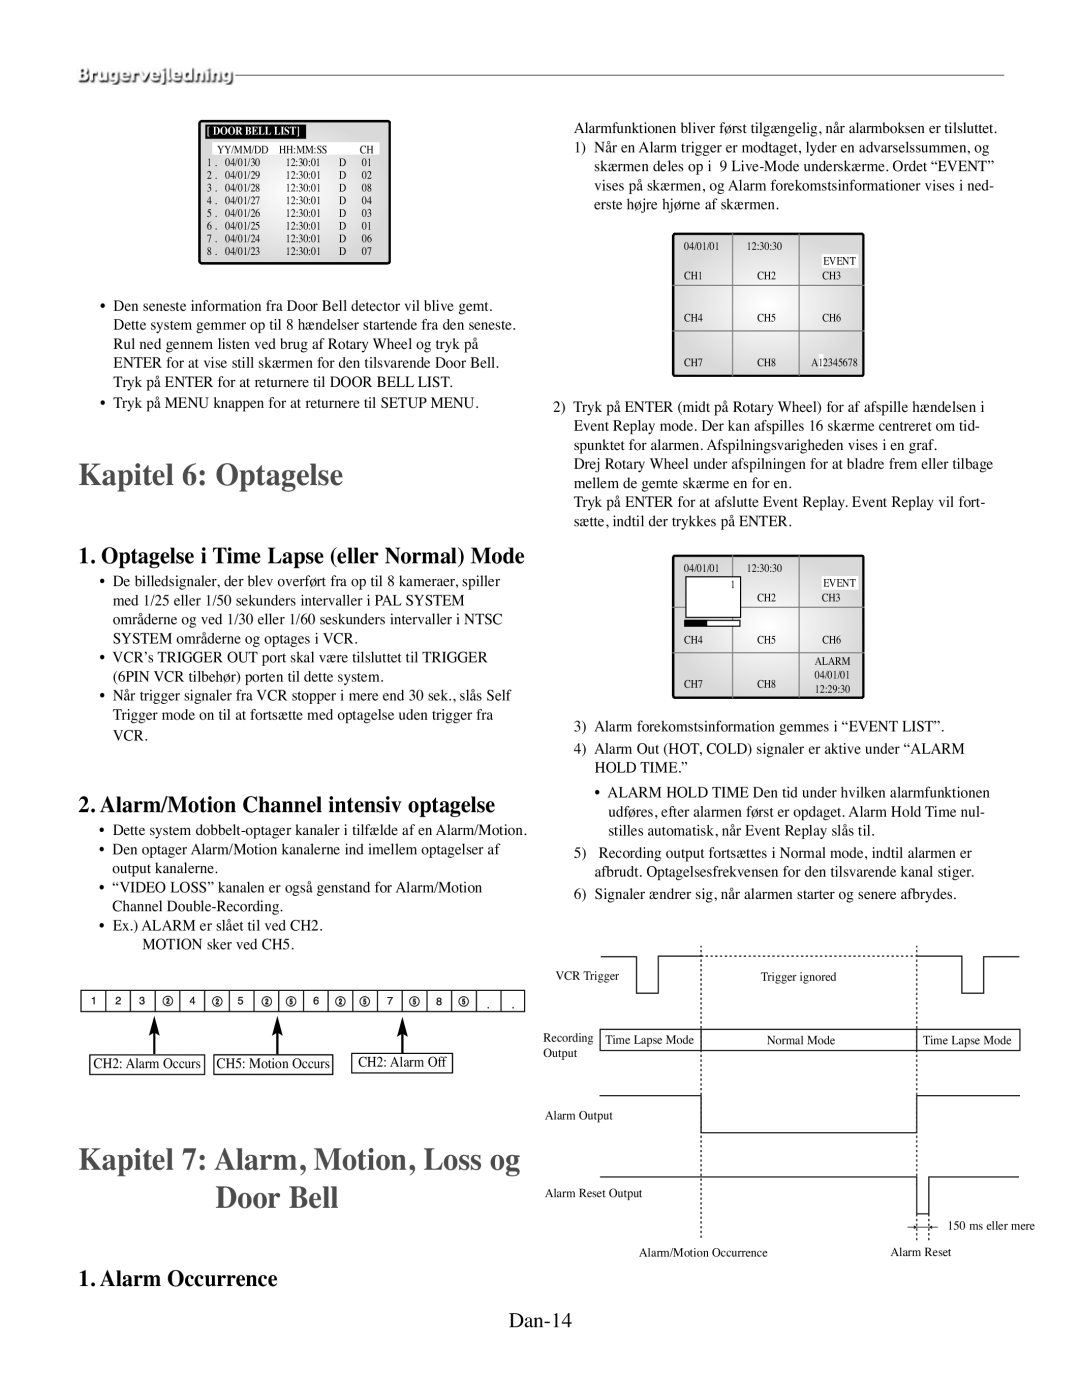 Samsung SMO-210TRP manual Kapitel 6 Optagelse, Kapitel 7 Alarm, Motion, Loss og Door Bell, Alarm Occurrence, Dan-14 